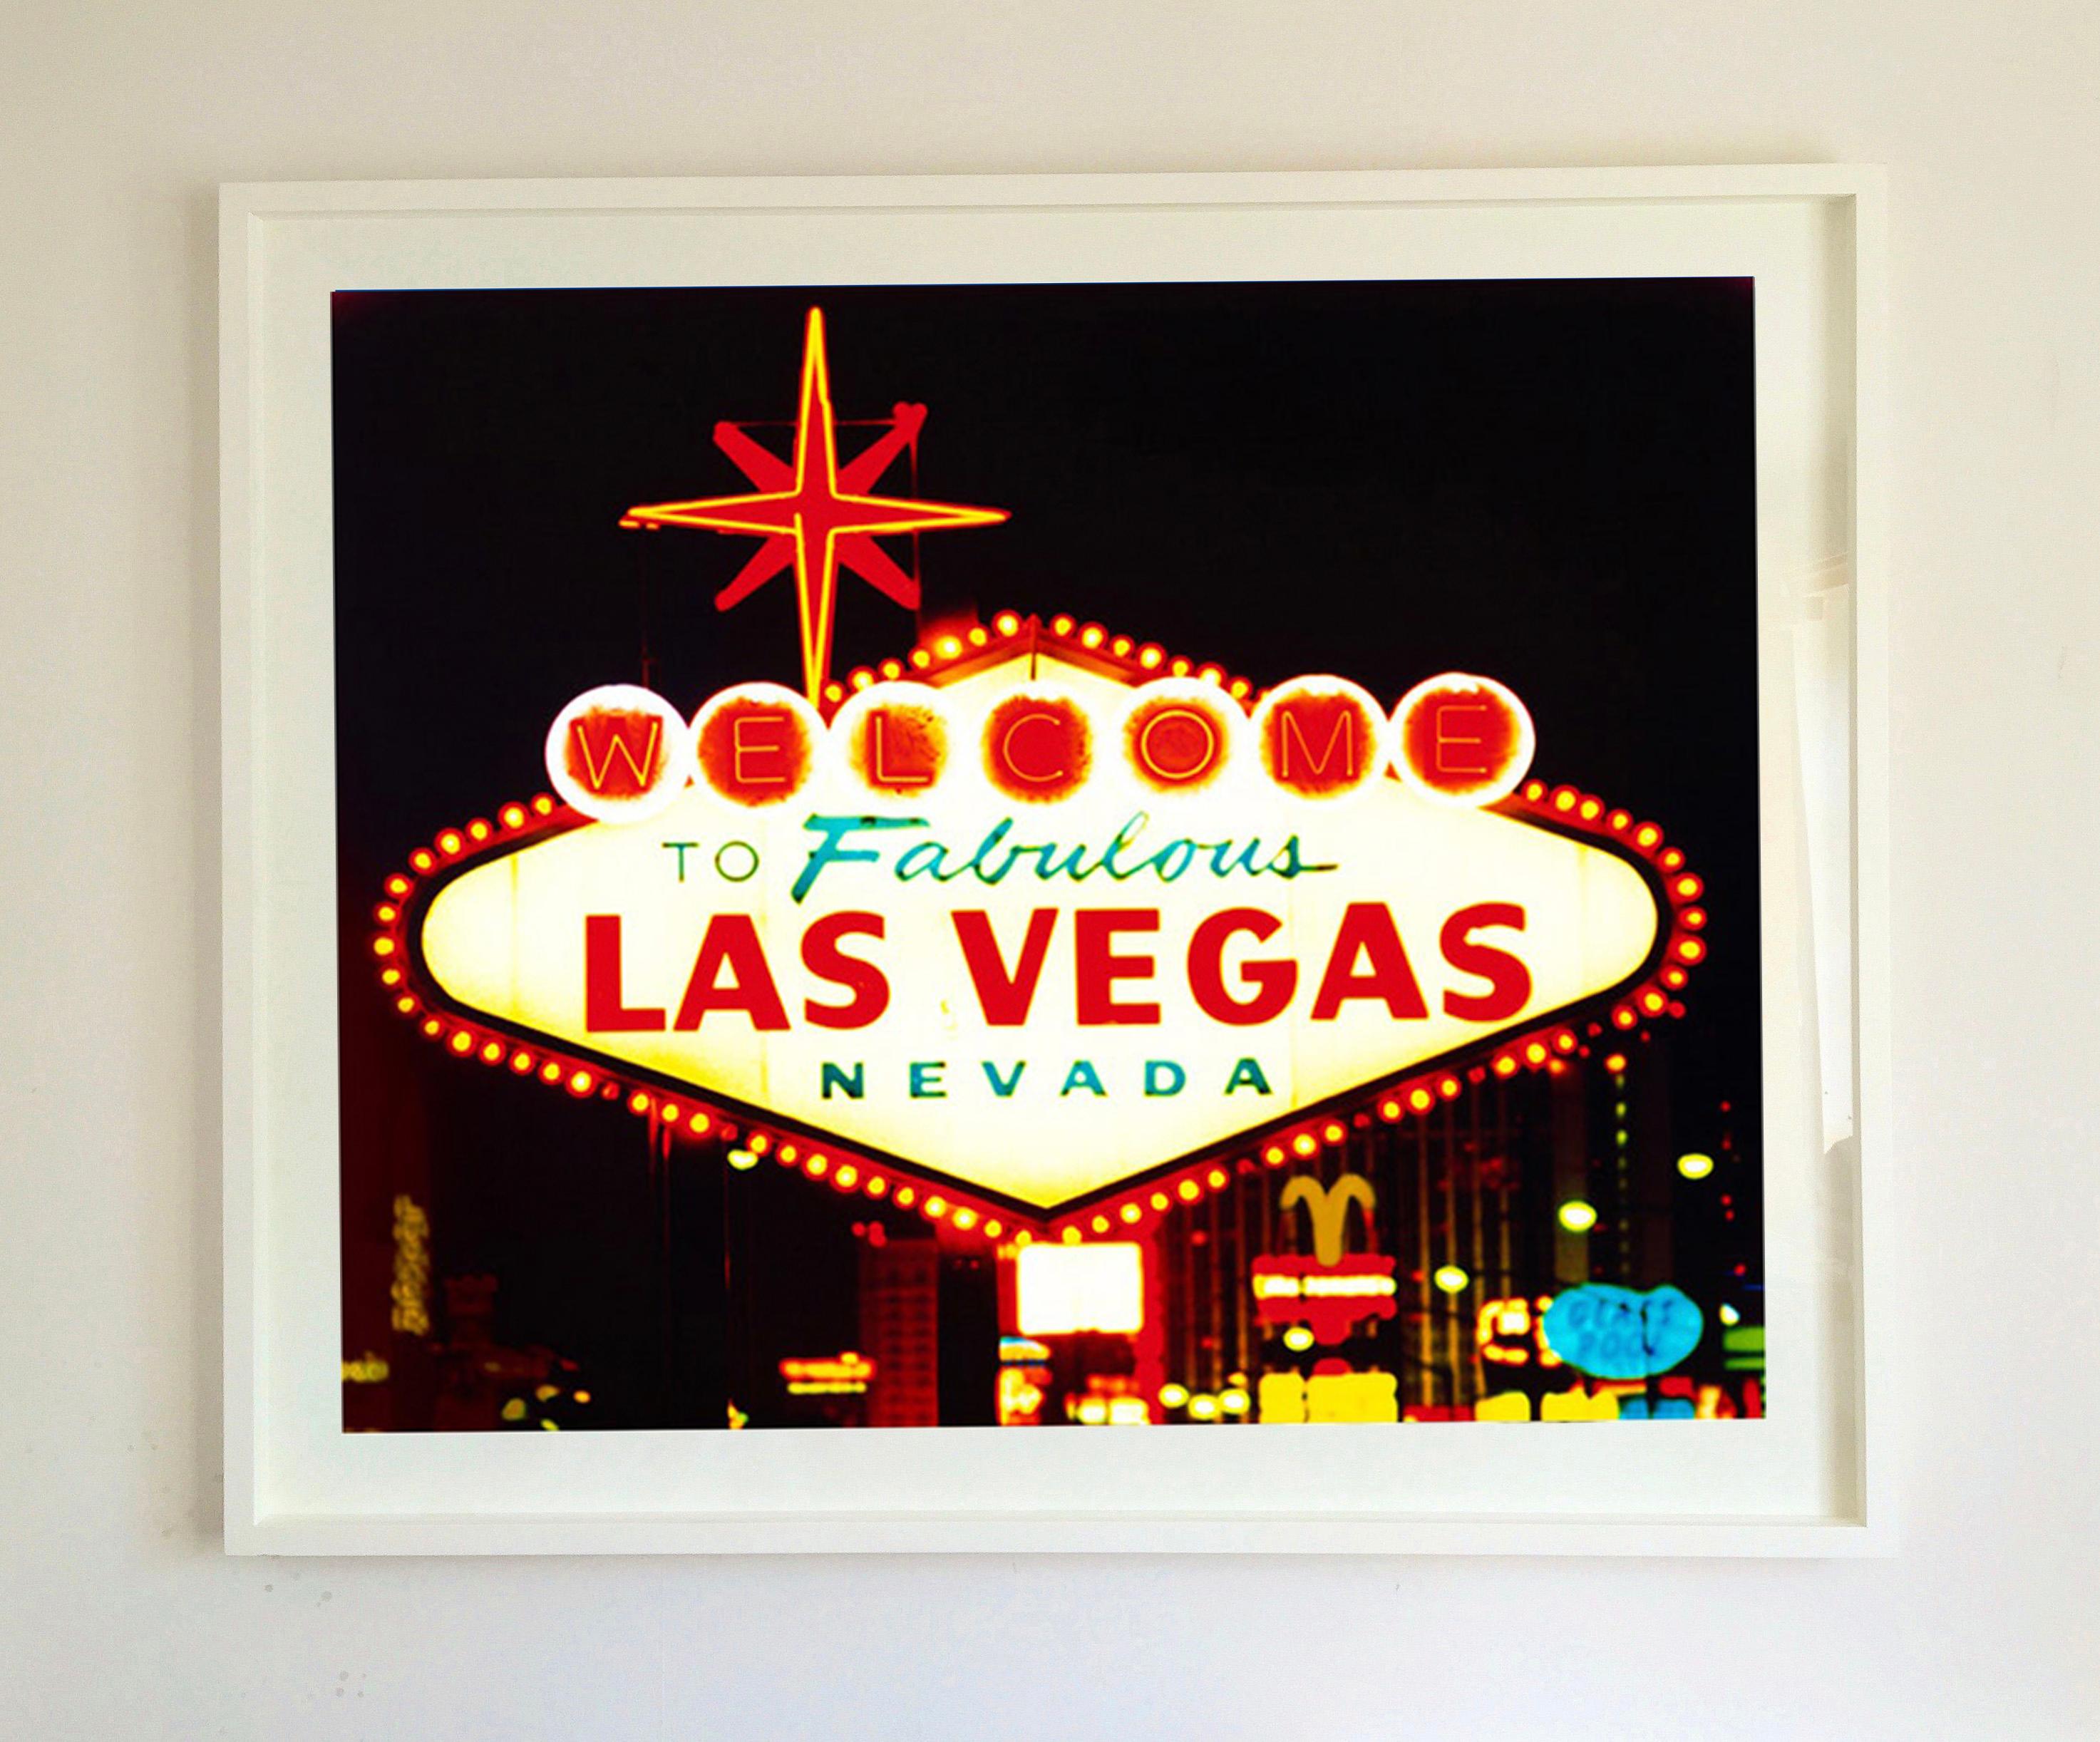 Willkommen, Las Vegas, Nevada – Americana Pop Art Farbfotografie (Pop-Art), Print, von Richard Heeps